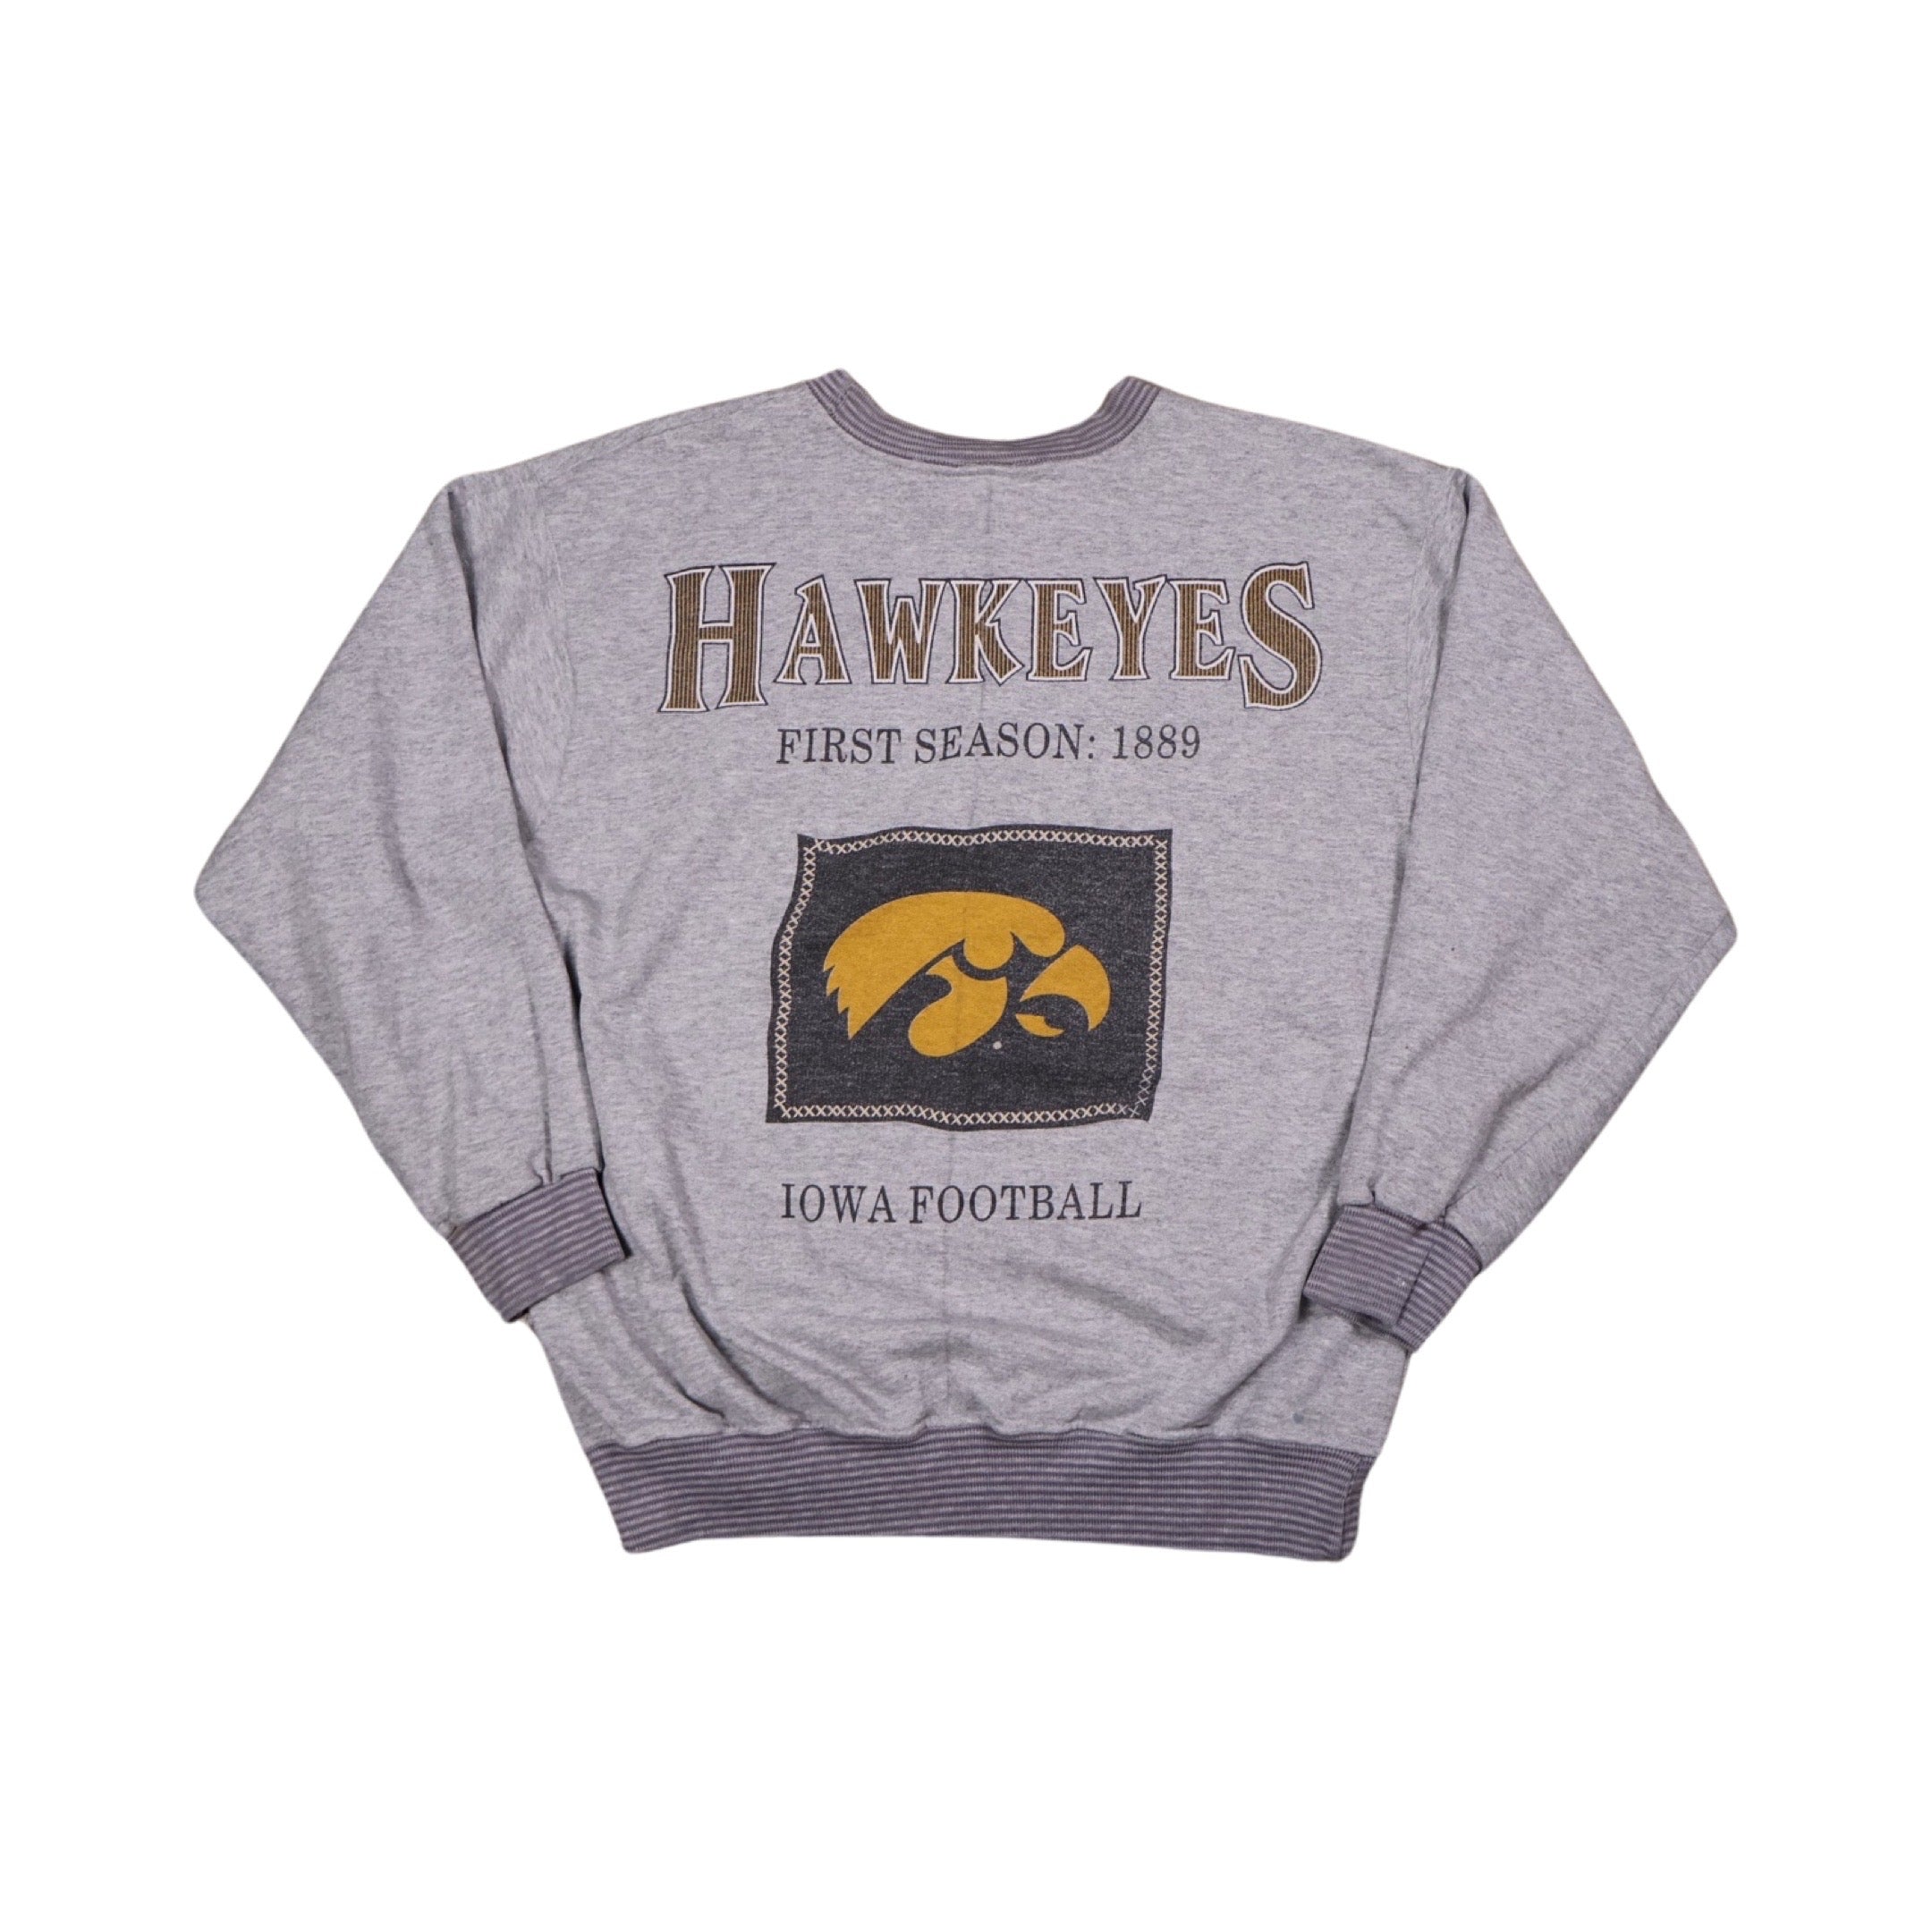 Iowa Hawkeyes 90s Sweater (Large)